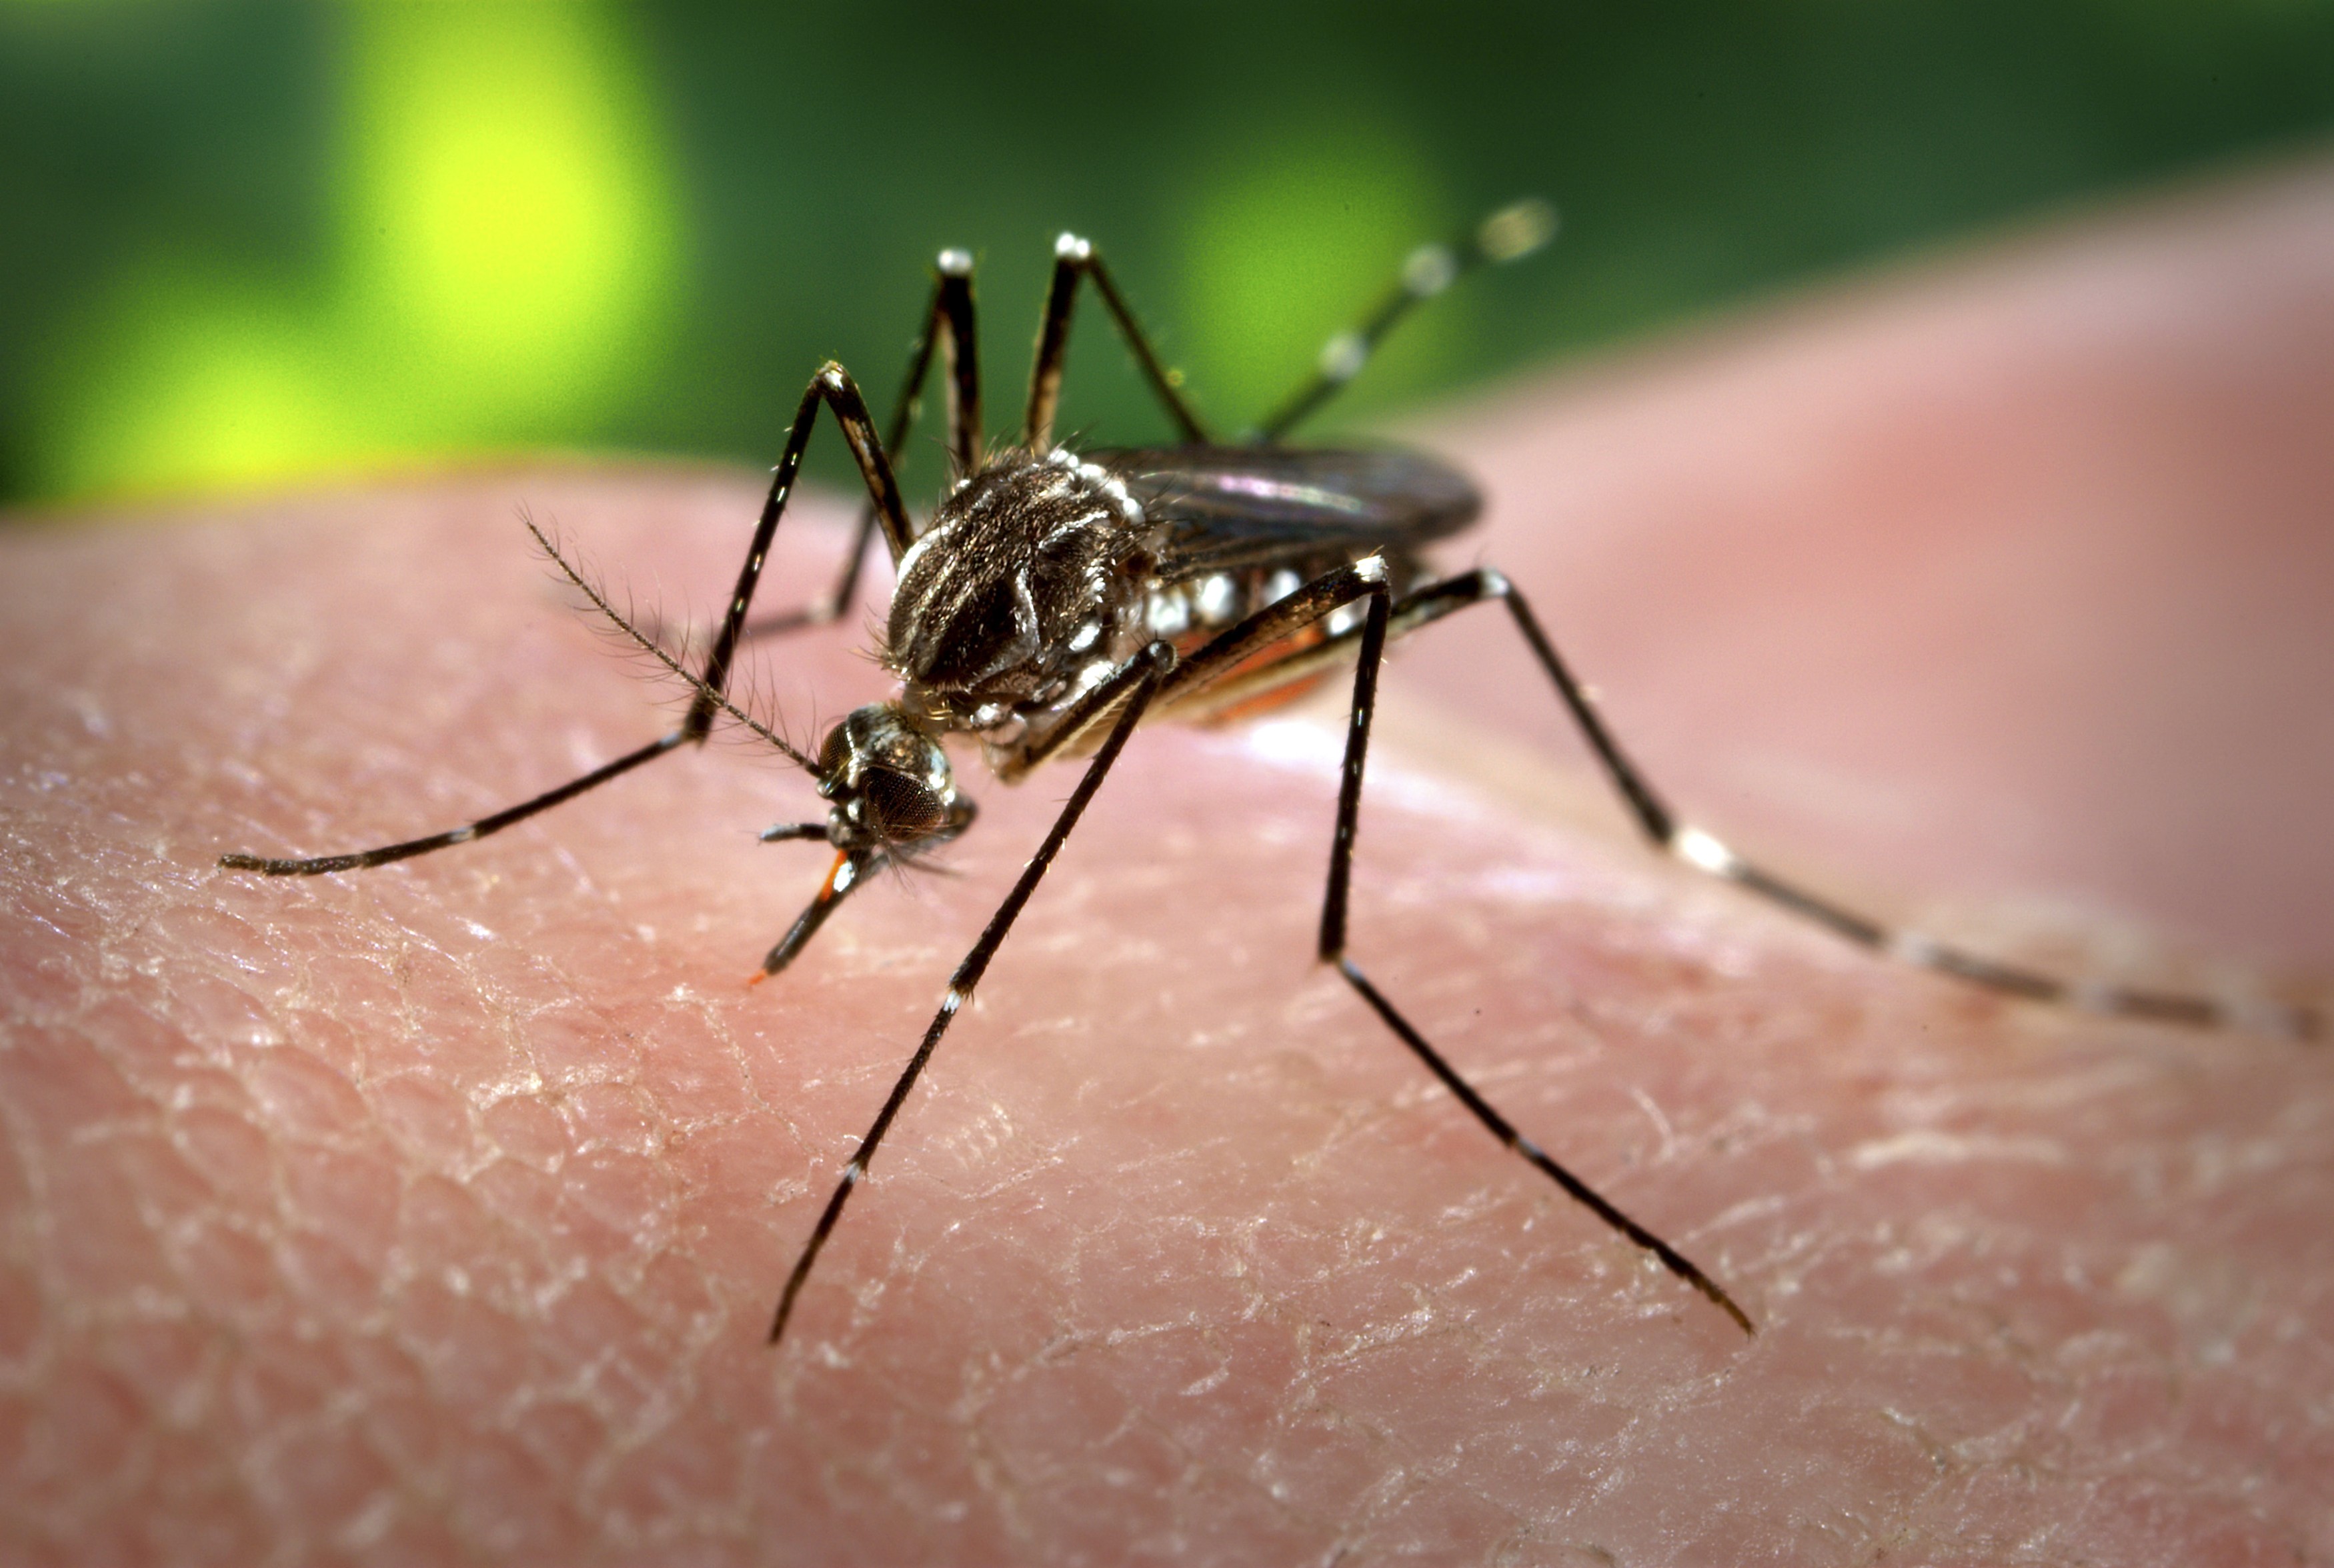 A female Aedes aegypti mosquito. Photo: AP